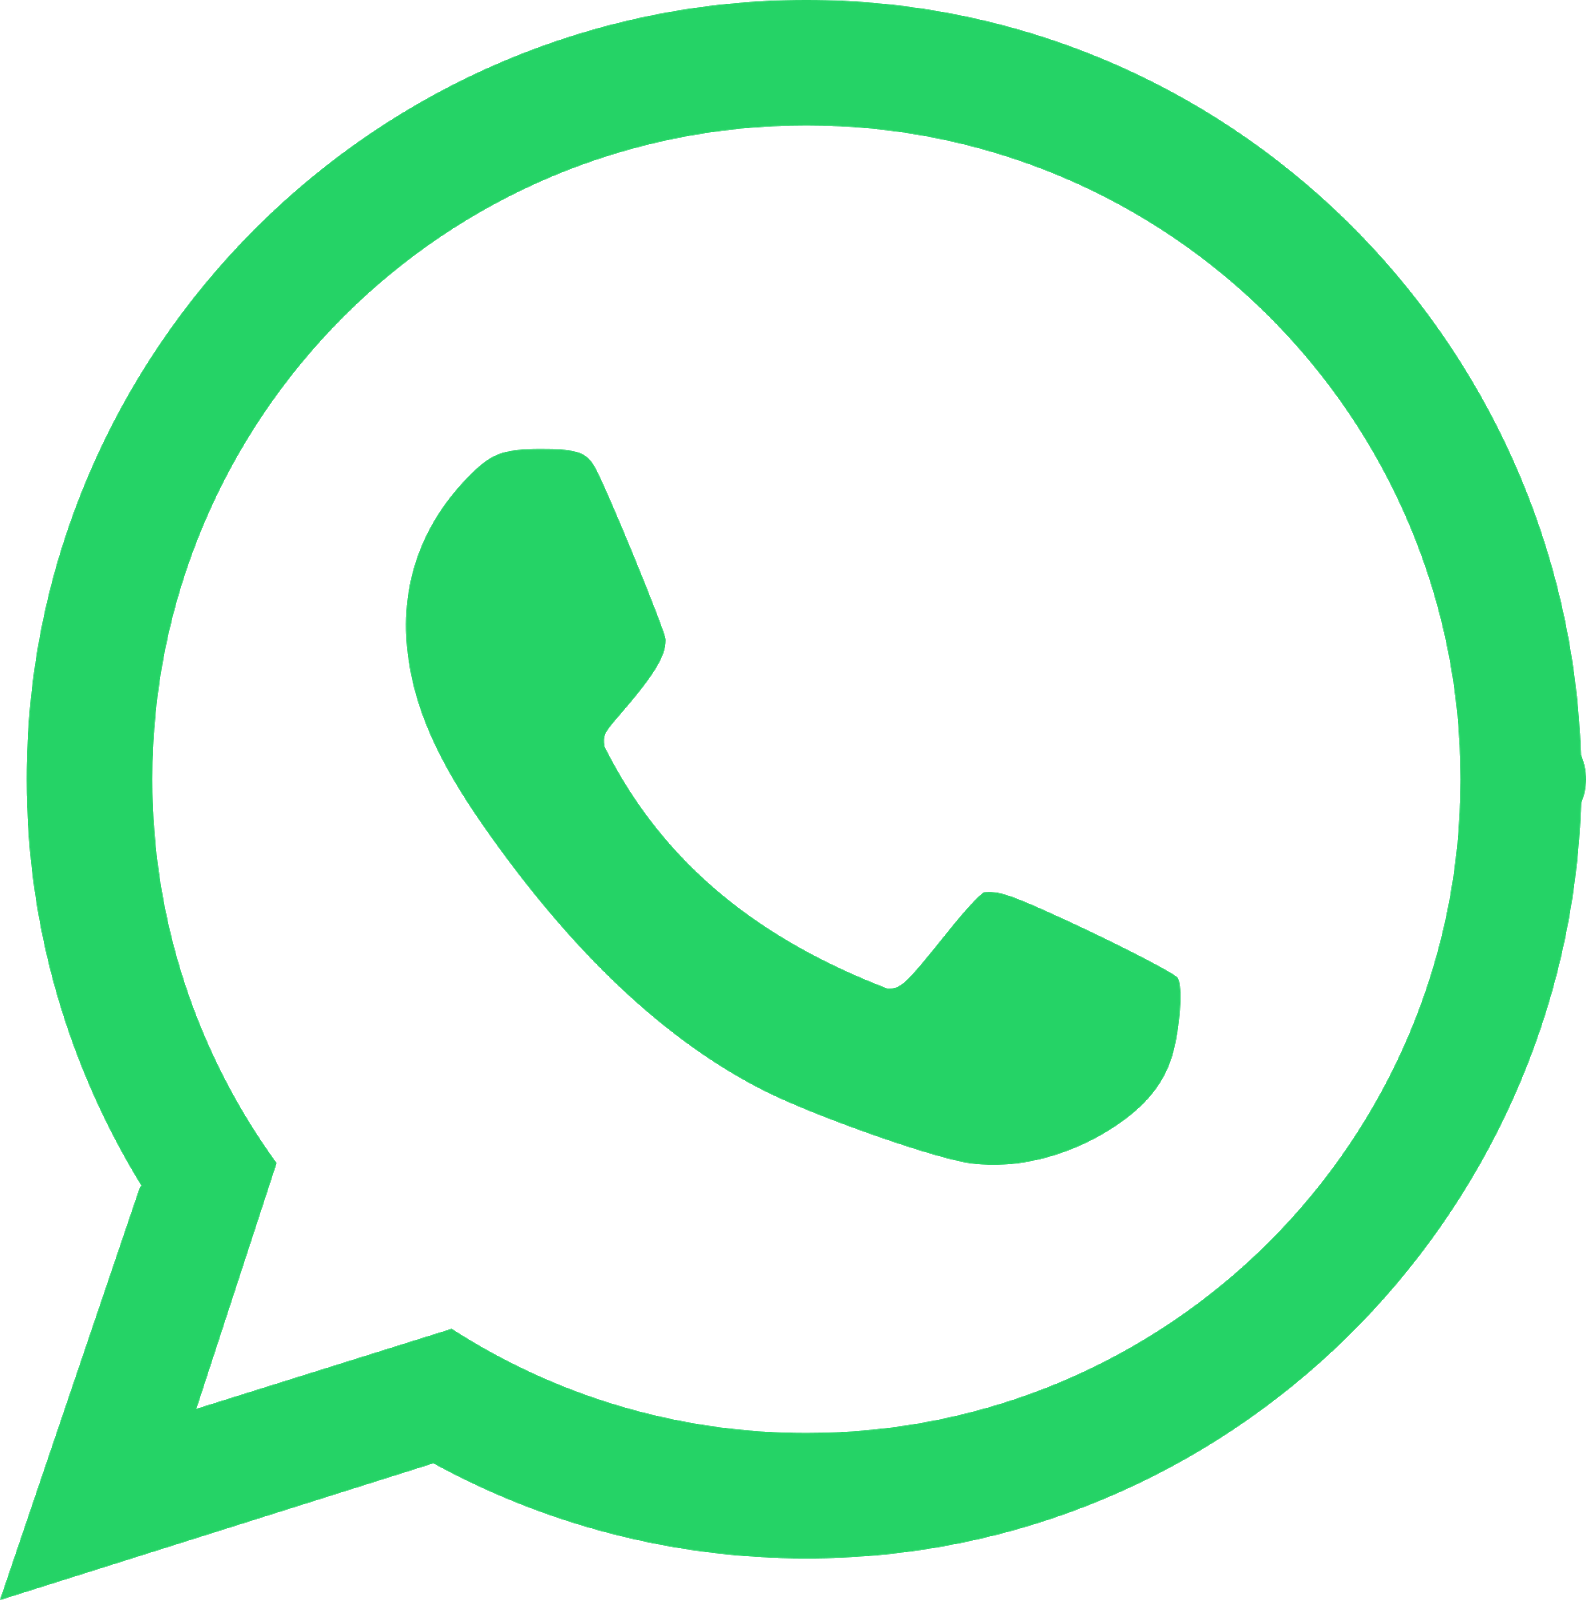 Chamar no WhatsApp